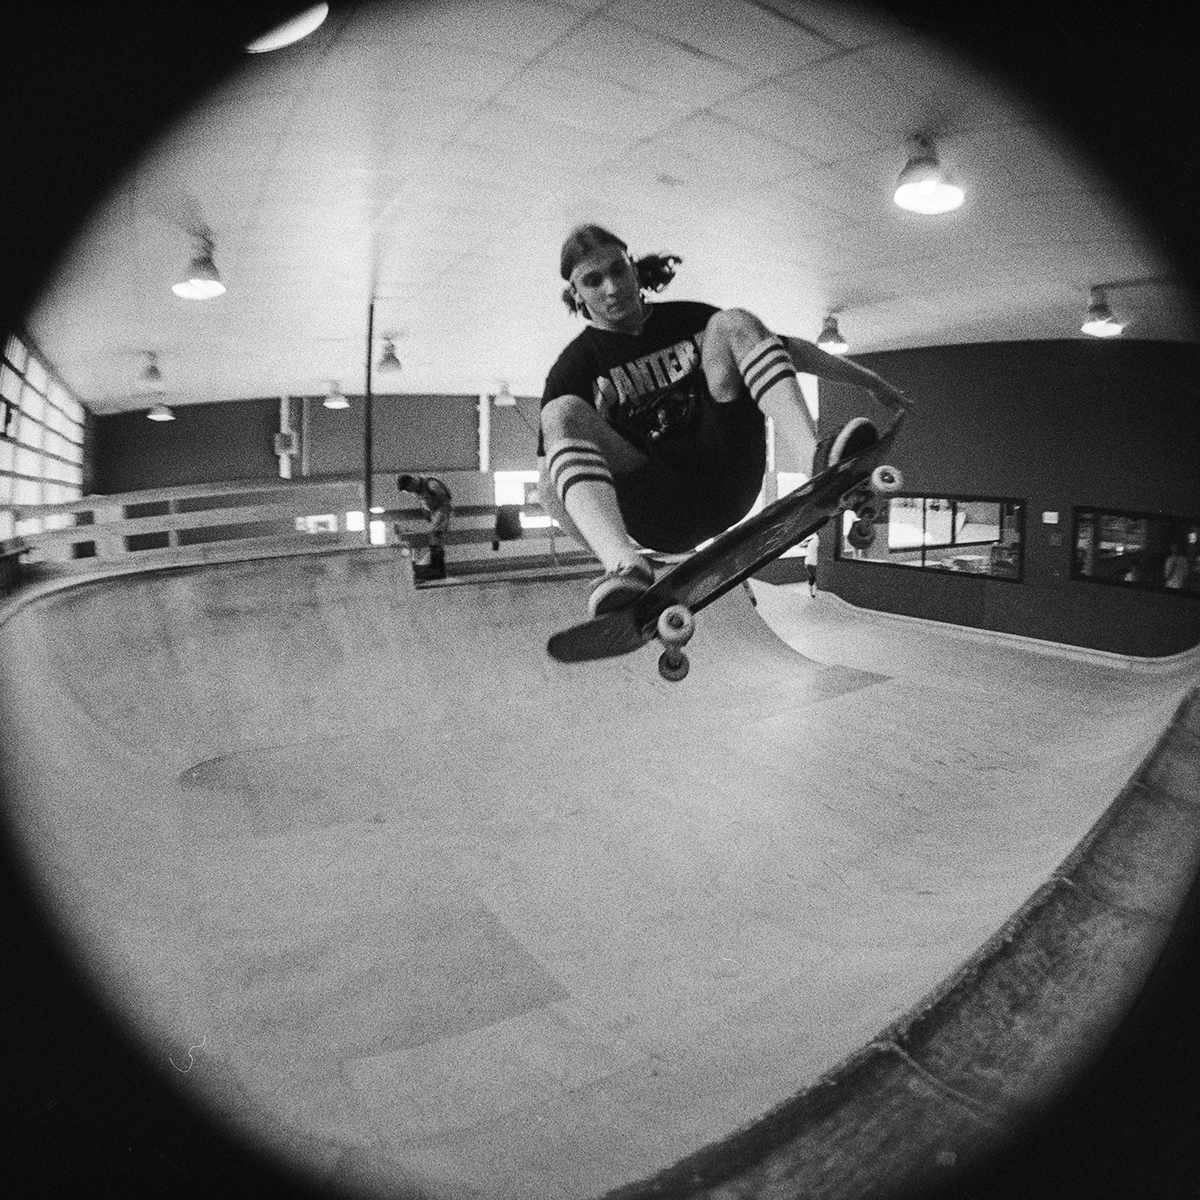 Fotografía Documental fotografia analogica 35 mm skateboarding monopatin